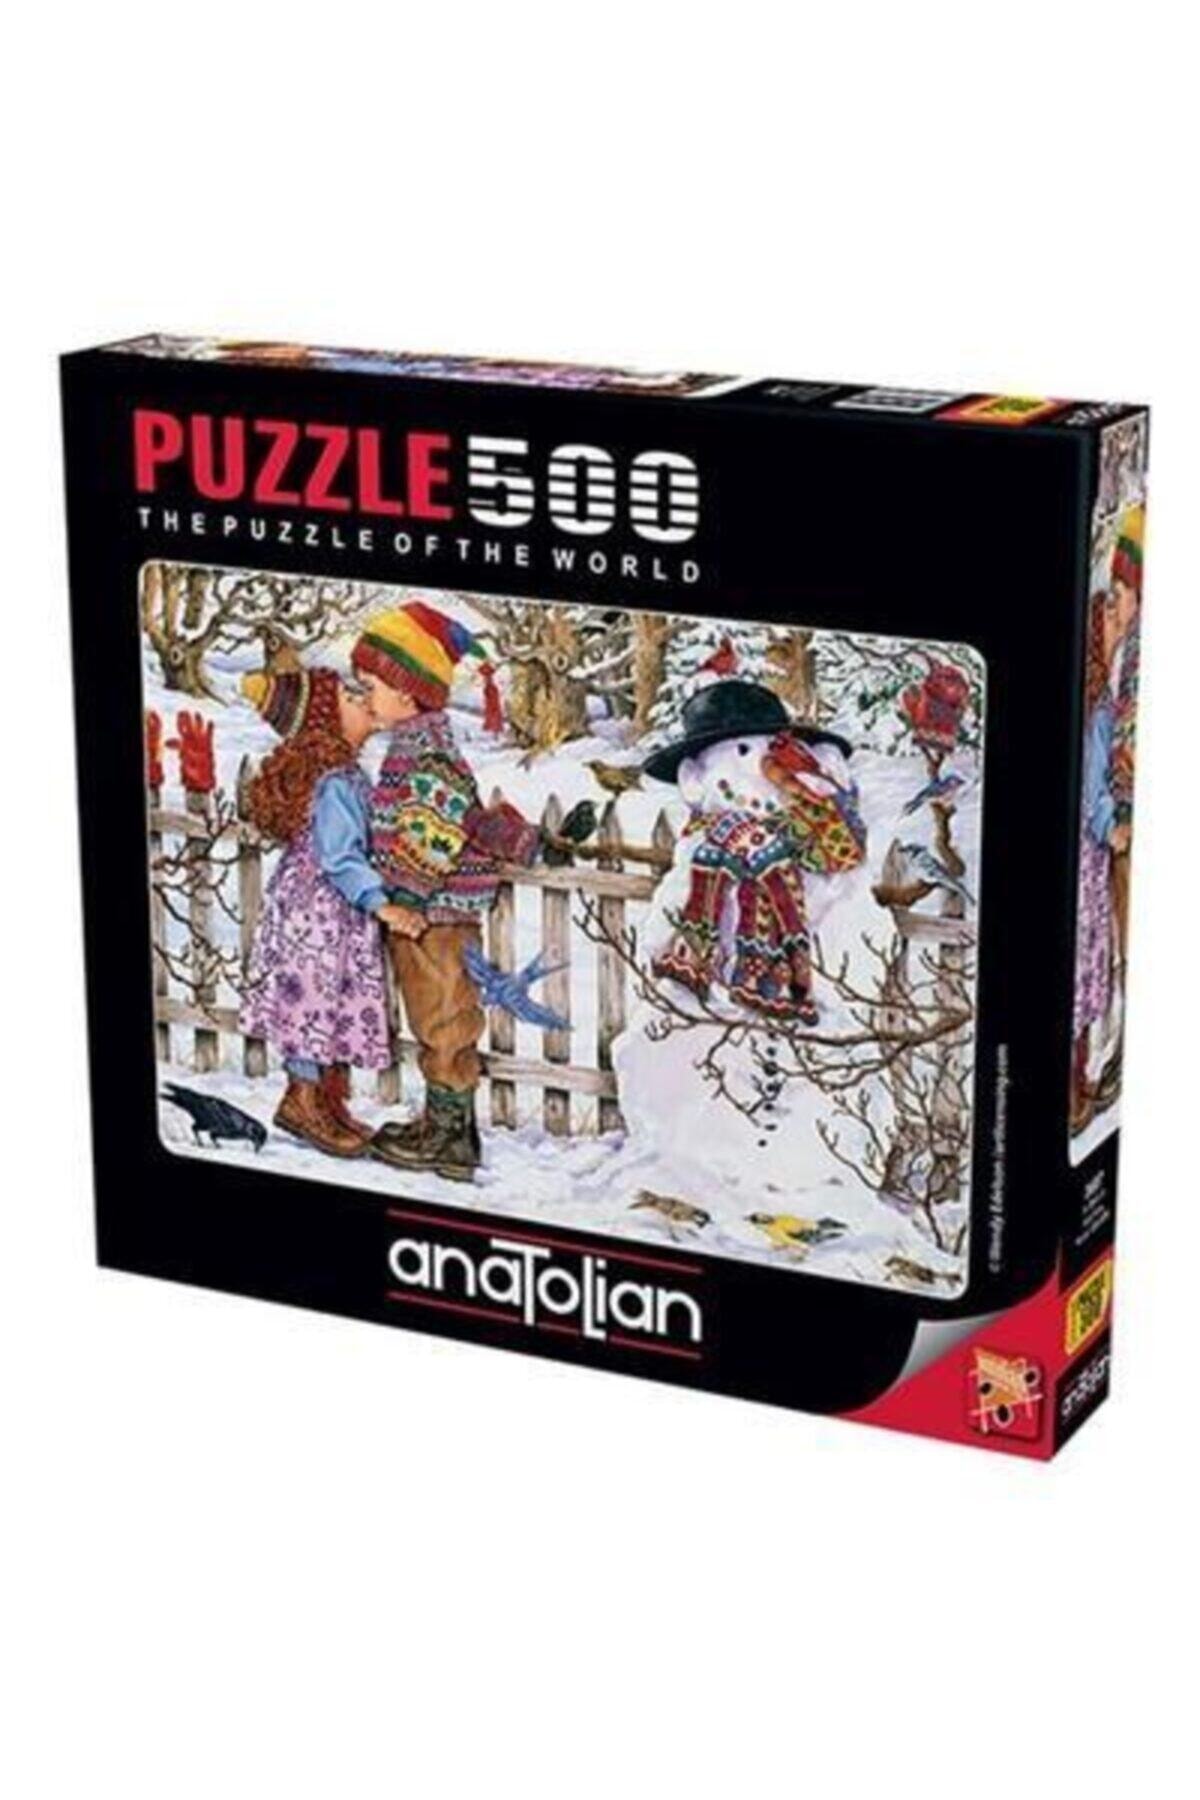 Anatolian Puzzle İlk Öpücük / 500 Parçalık Puzzle, Kod:3607